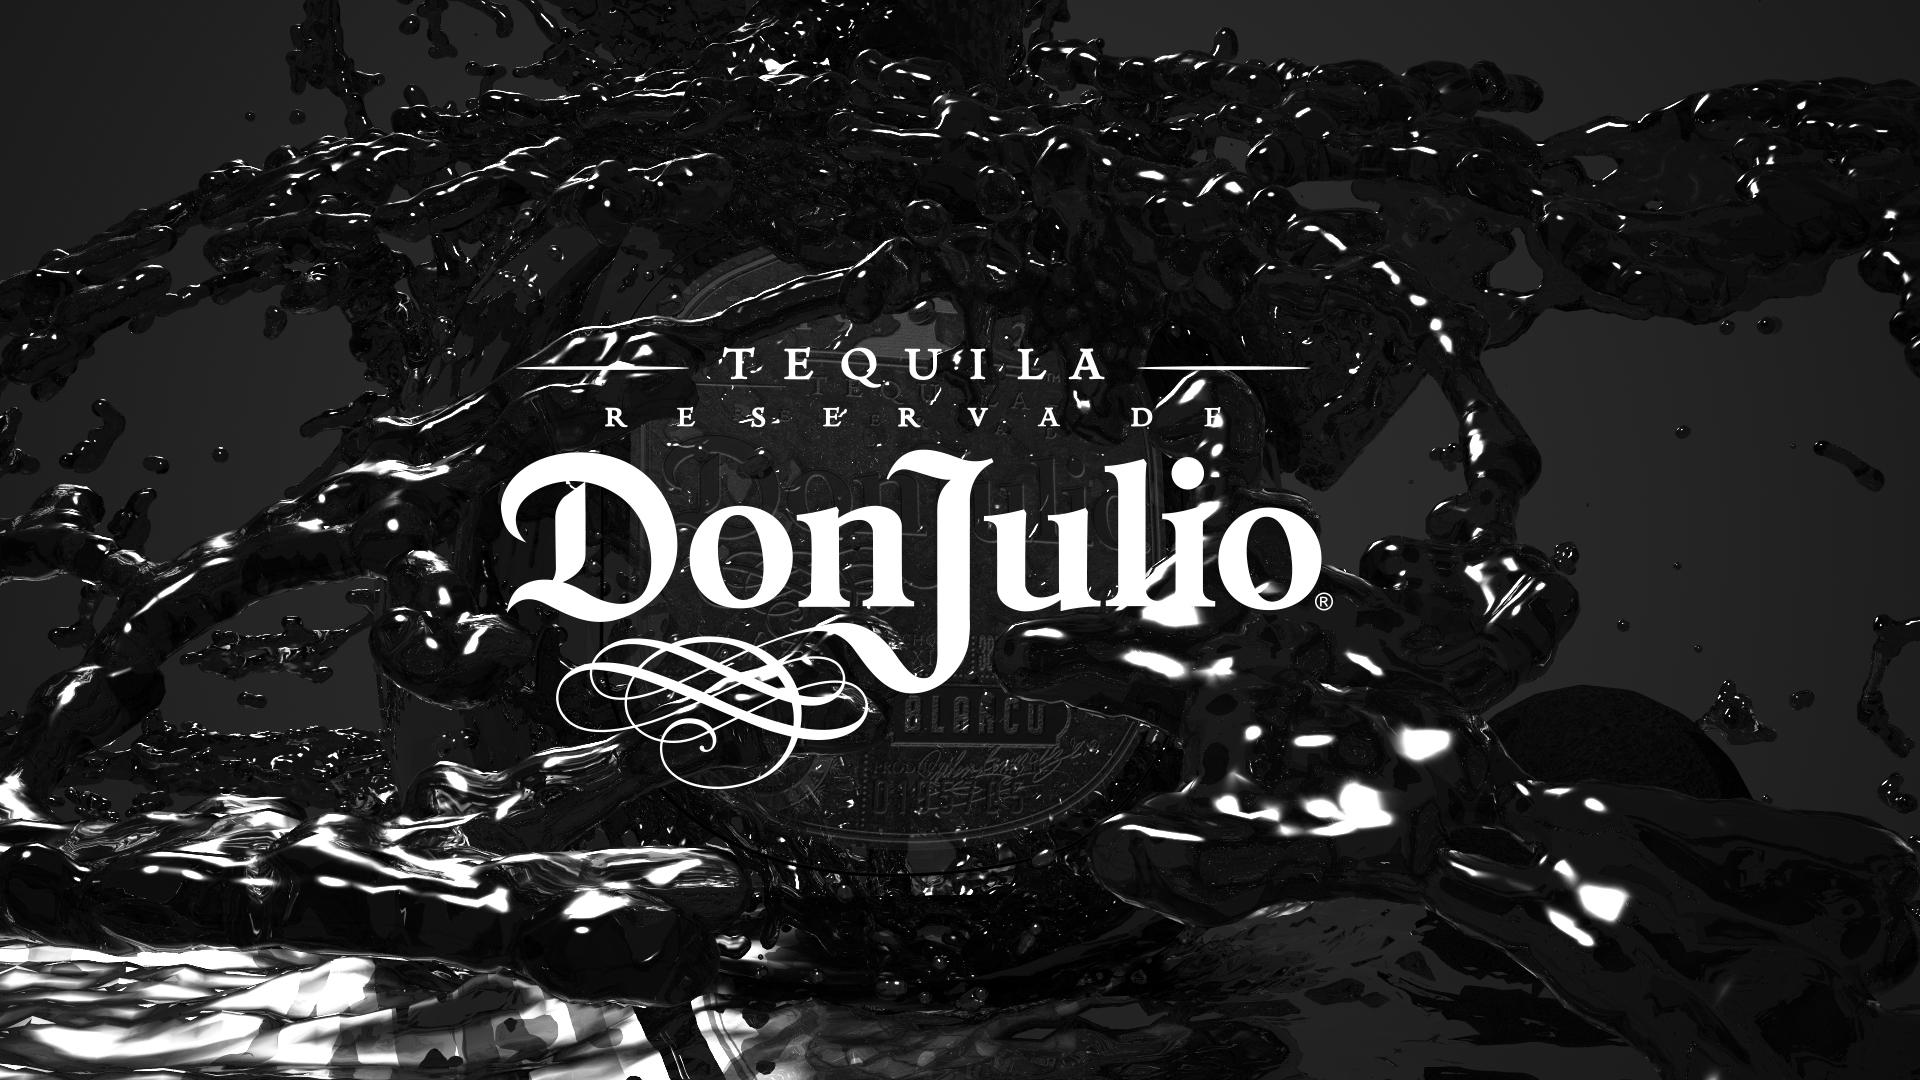 3D rendering modelado Tequila don julio.